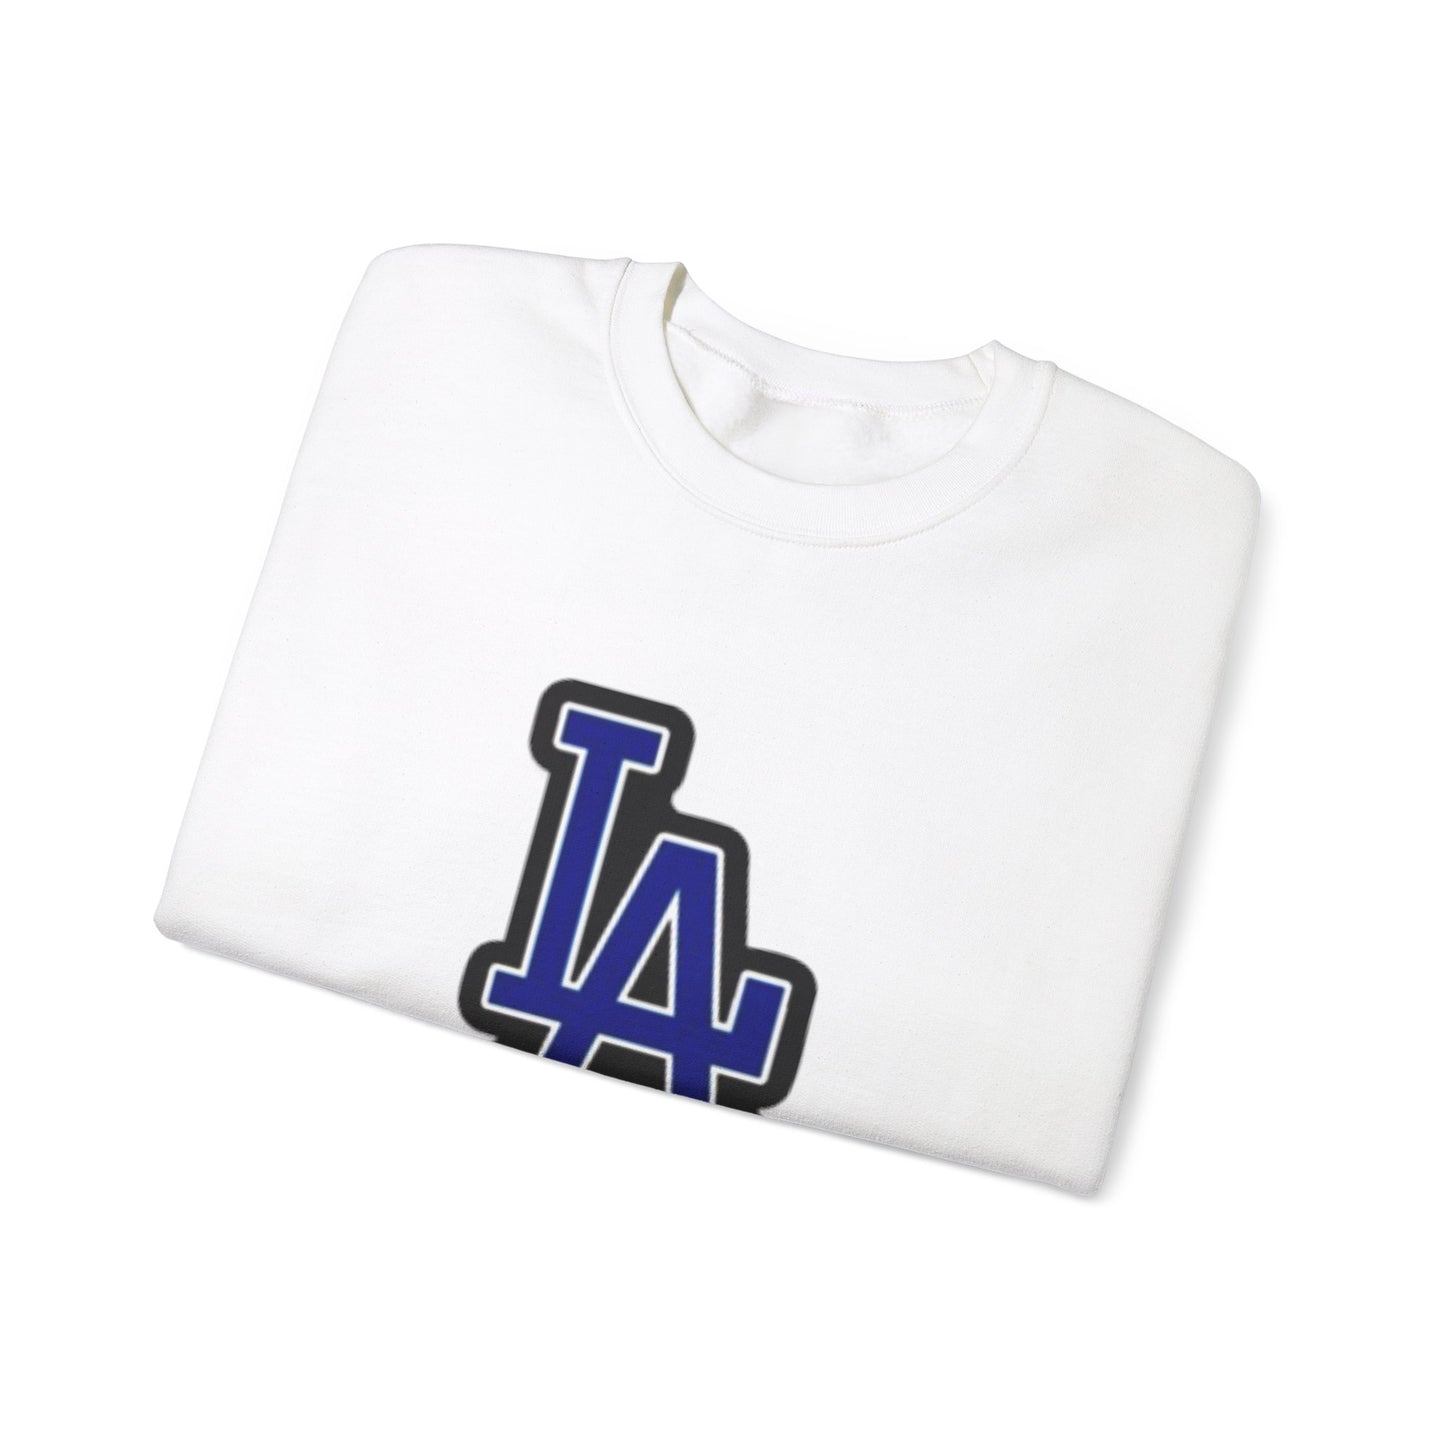 Los Angeles Dodgers - Unisex Heavy Blend Crewneck Sweatshirt